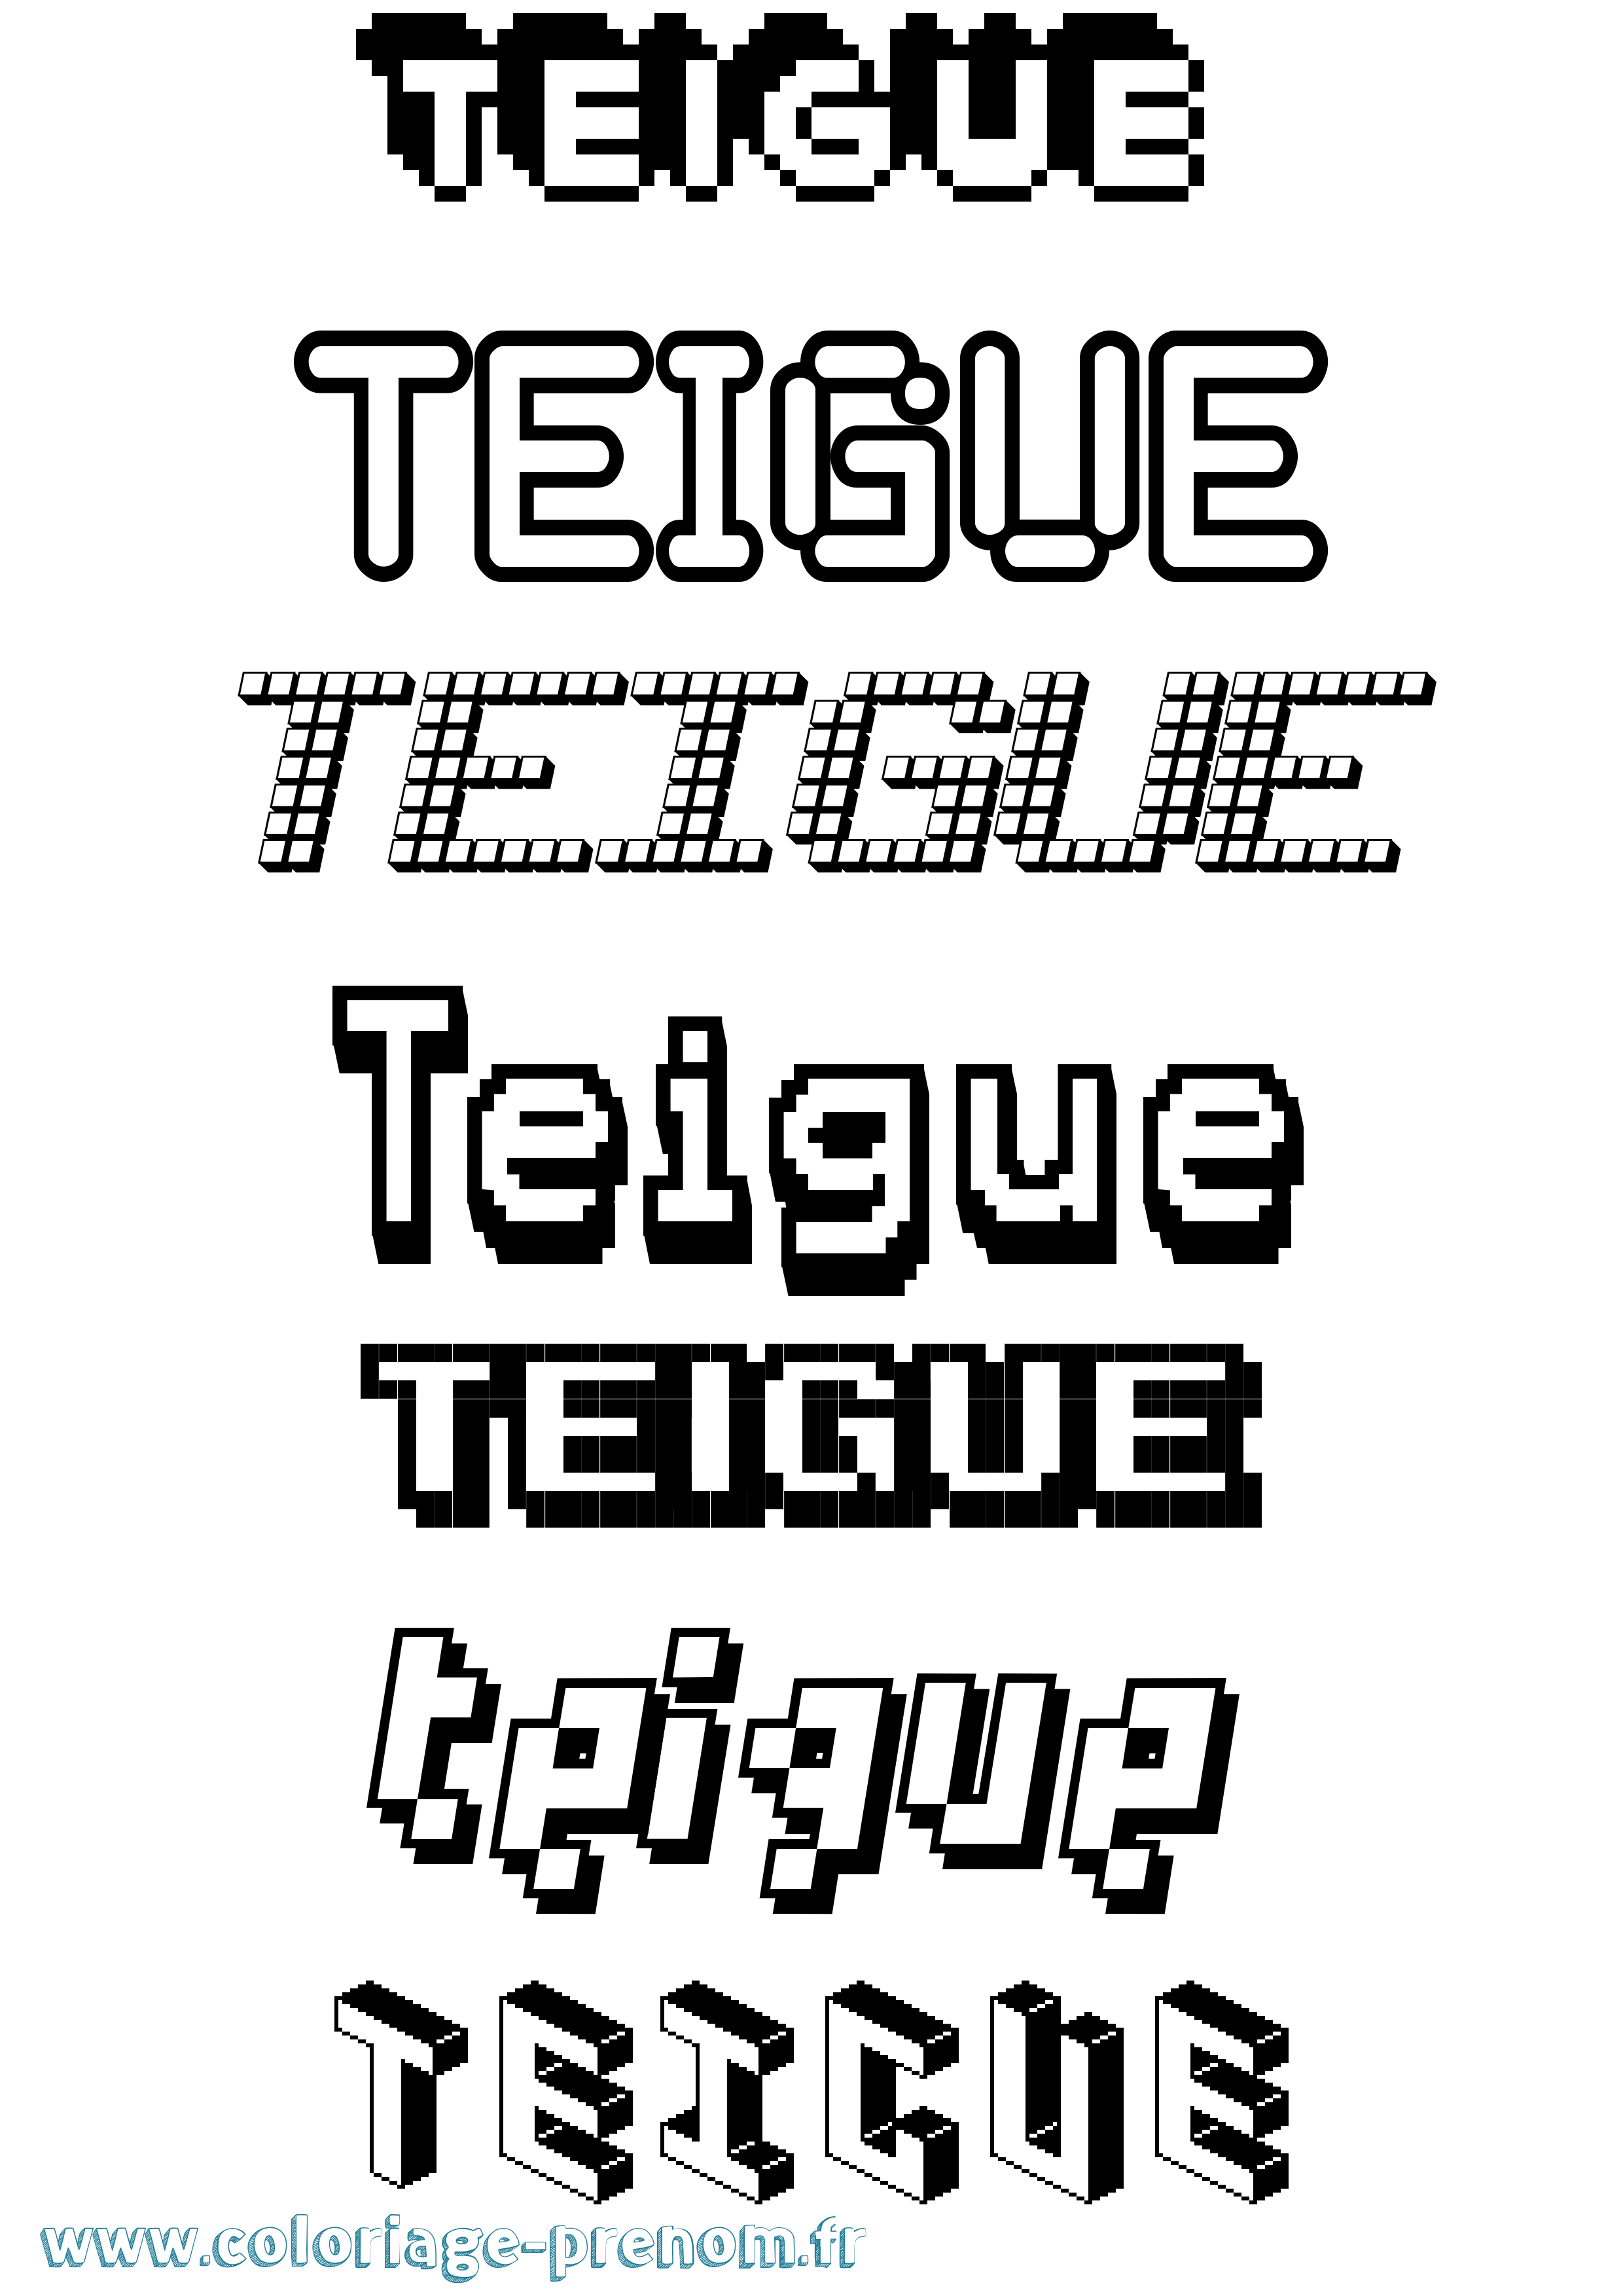 Coloriage prénom Teigue Pixel